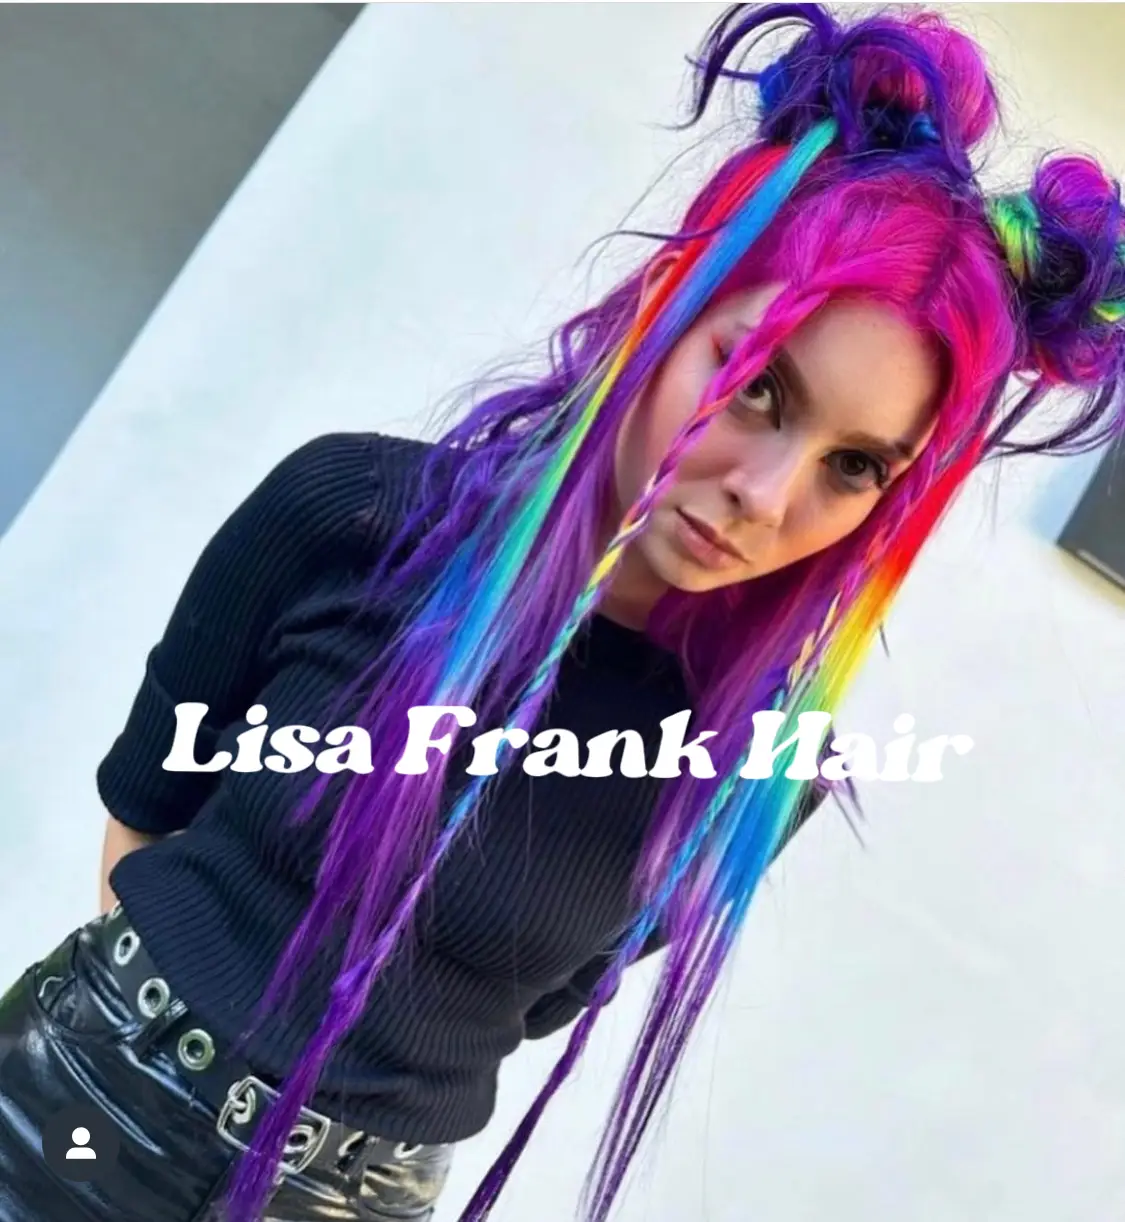 Lisa Frank Hair, Gallery posted by Bottleblonde76